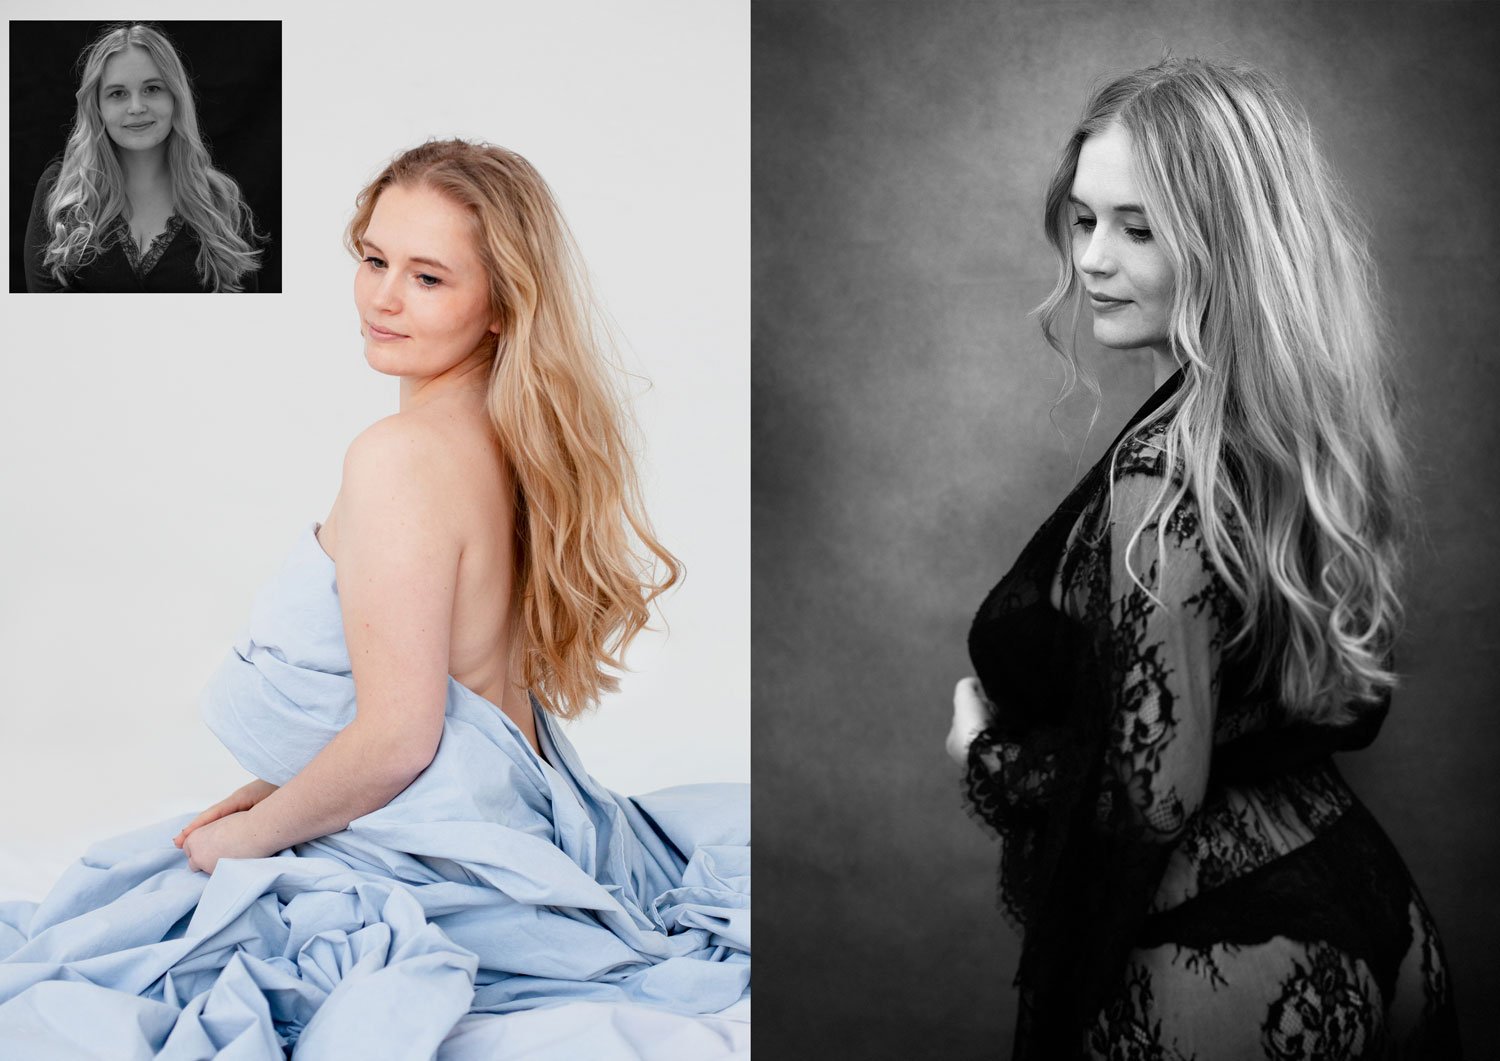 Annika_SheonaAnnPhoto_before&after_webready.jpg